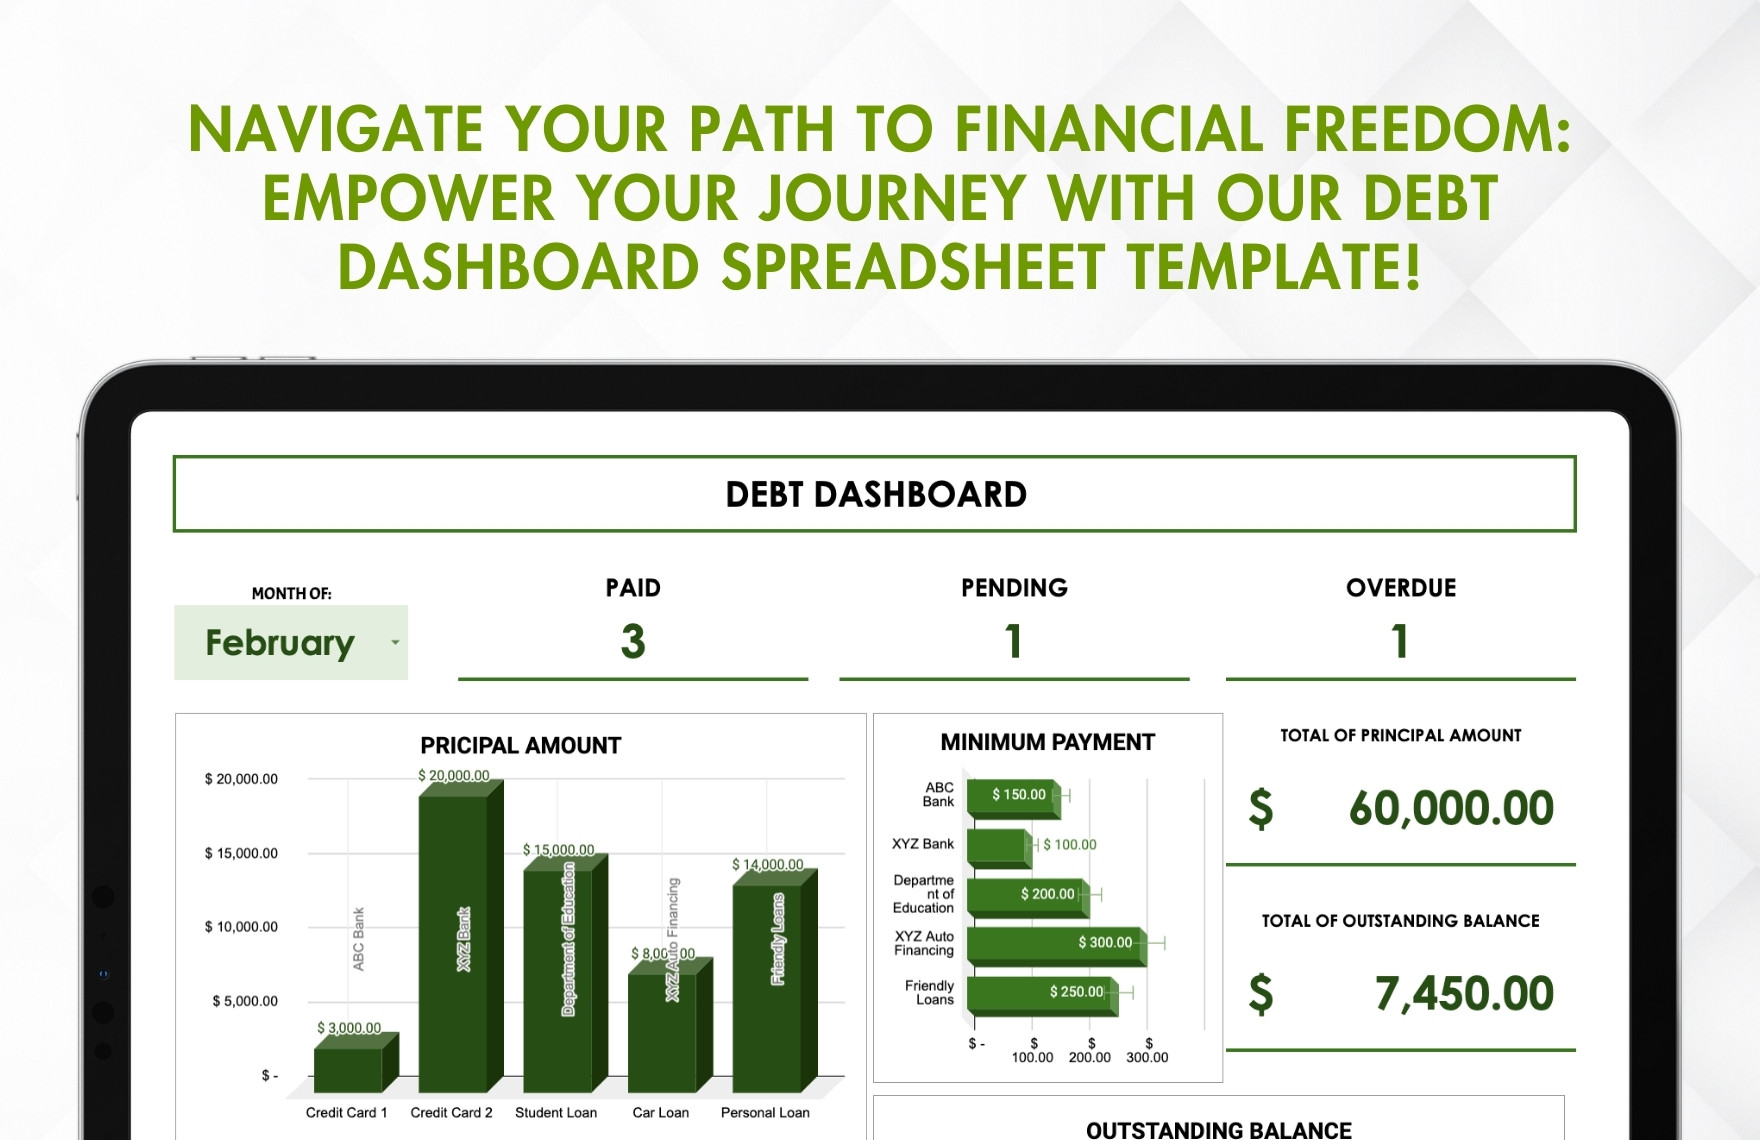 Debt Dashboard Spreadsheet Template